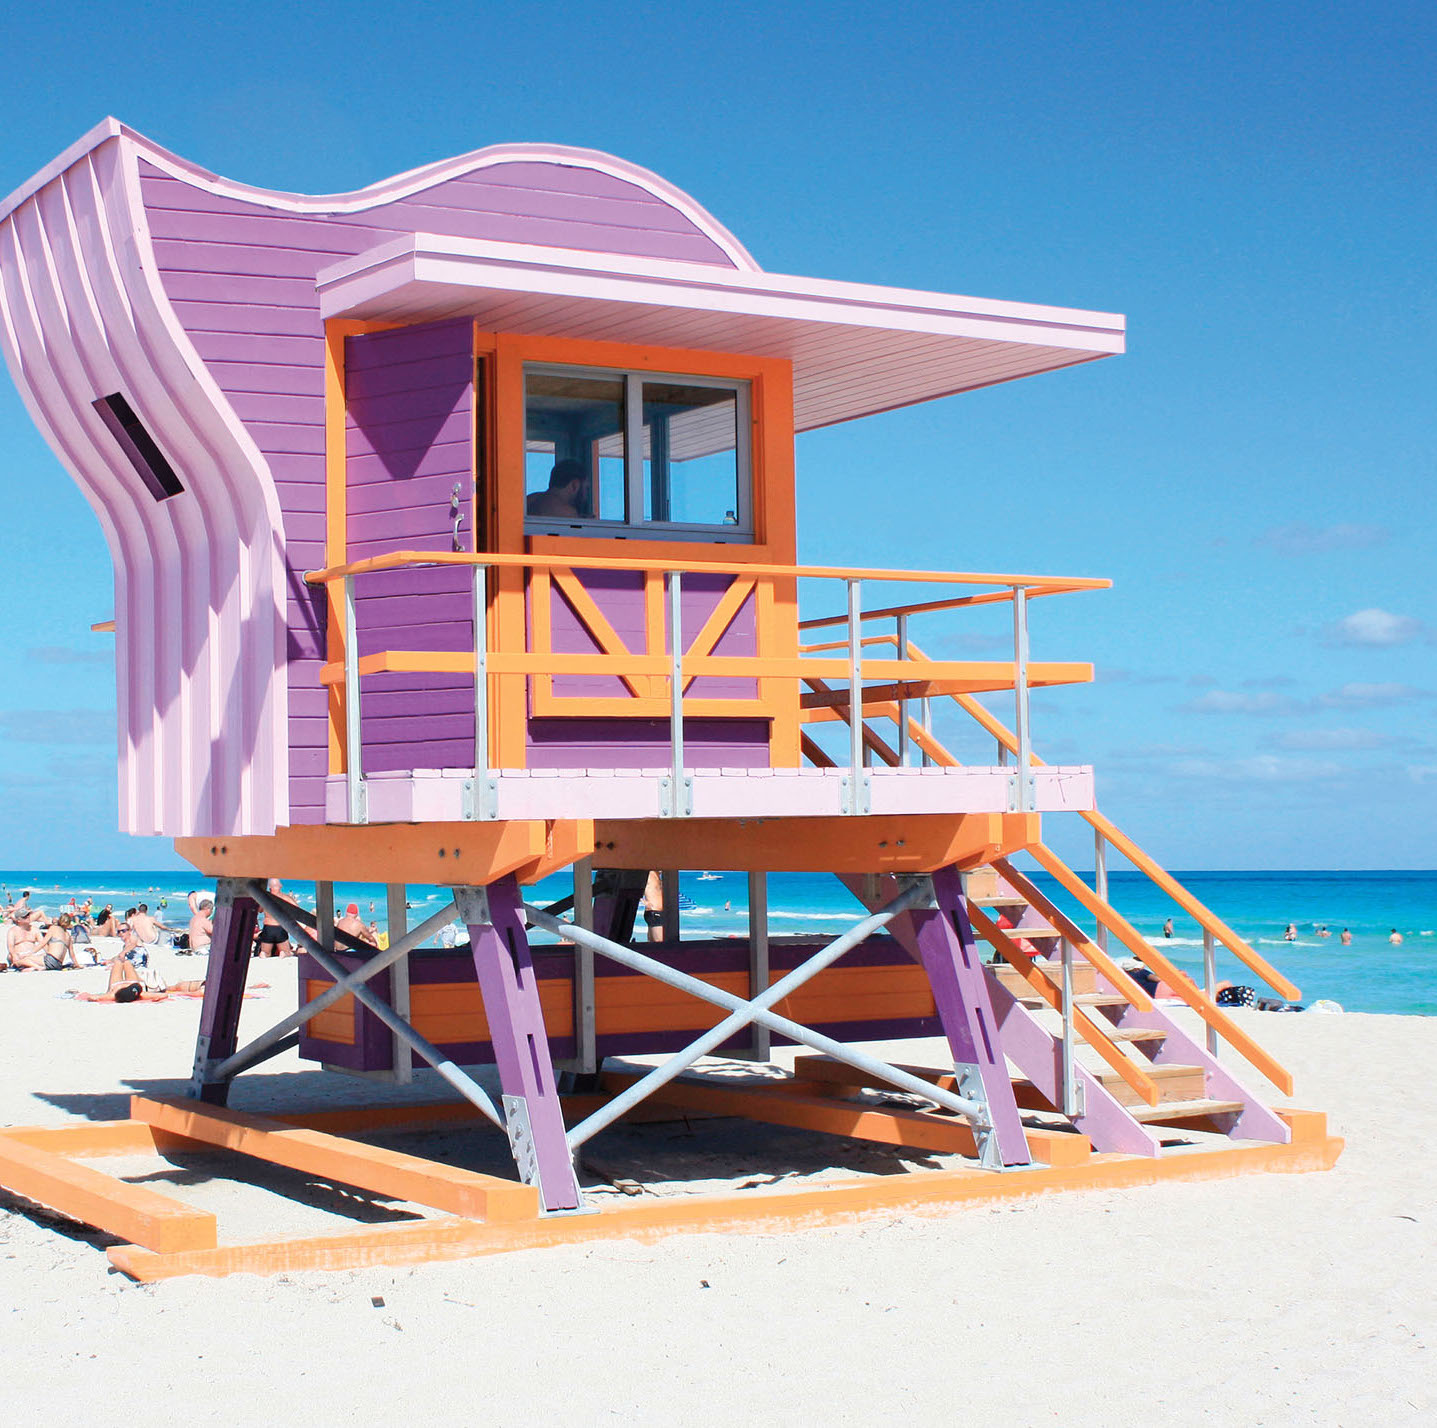 Miami travel guide - colourful lifeguard house